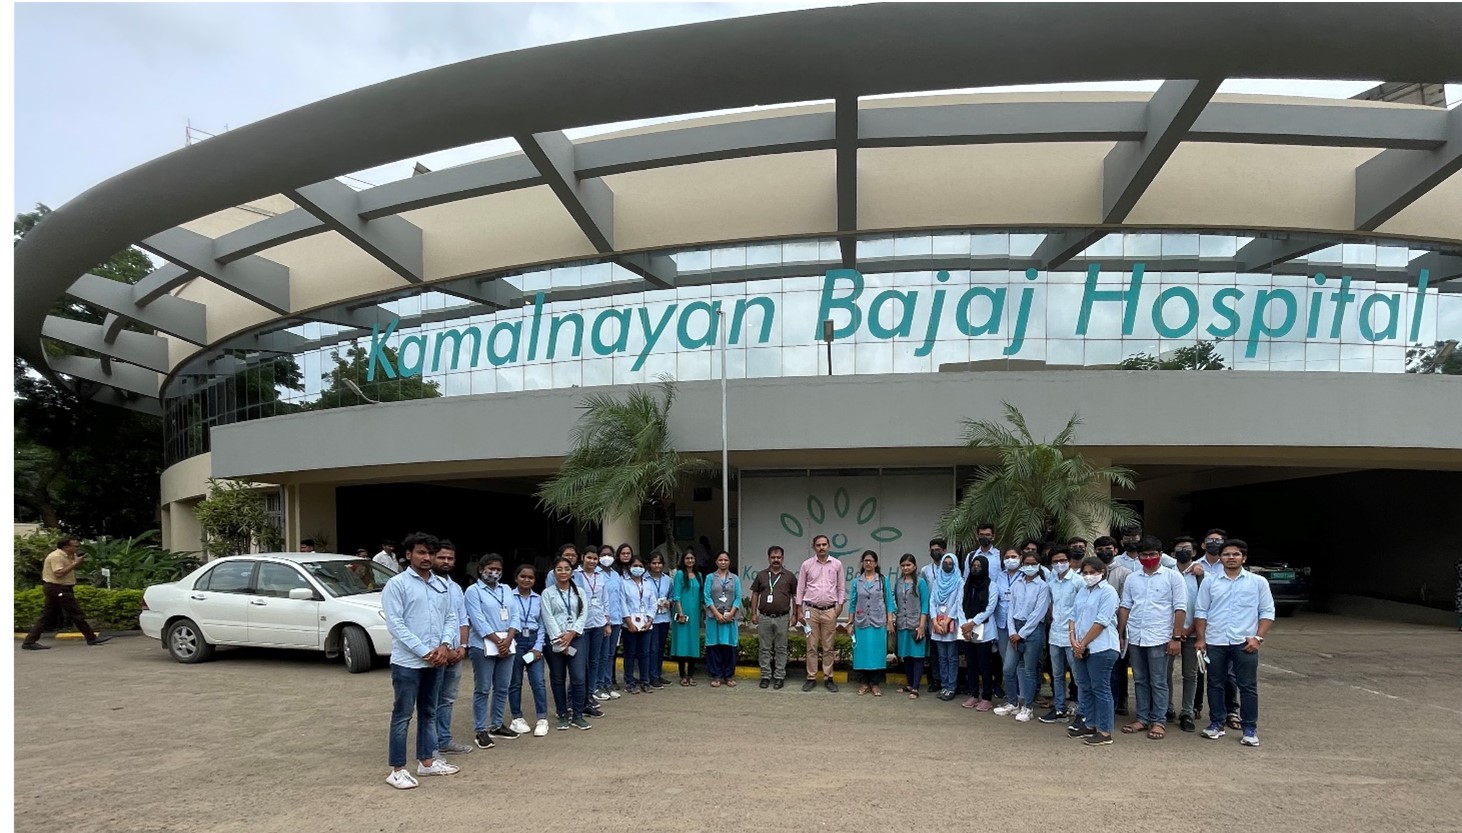 Visit to Kamalnayan Bajaj Hospital, Beed Bypass, Aurangabad